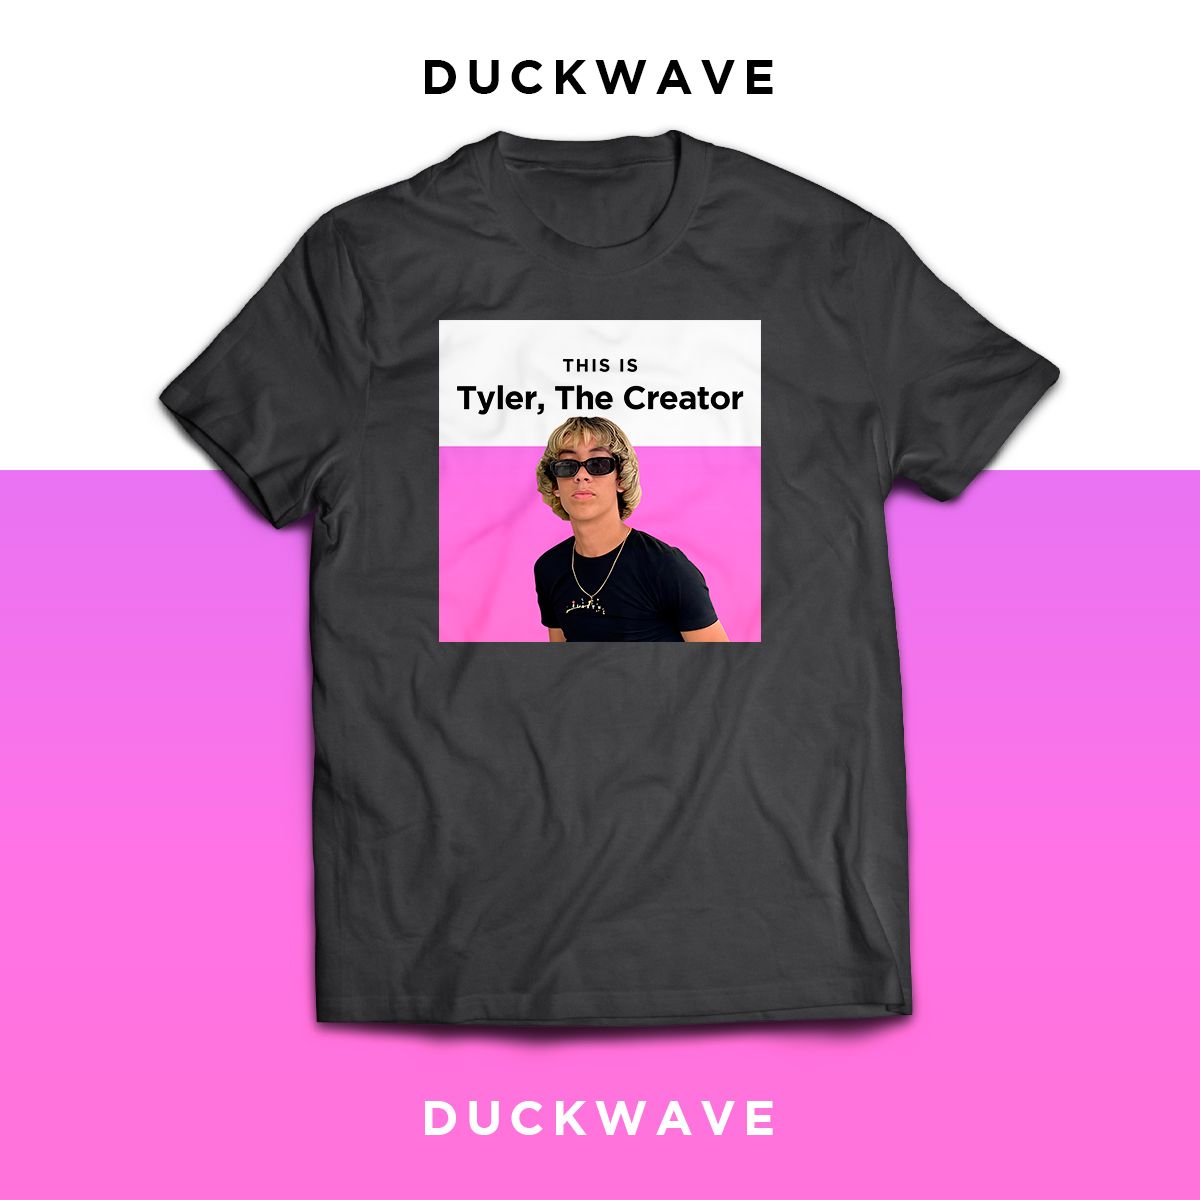 Nome do produto: Camiseta This is Tyler, The Creator com Xurrasco 021